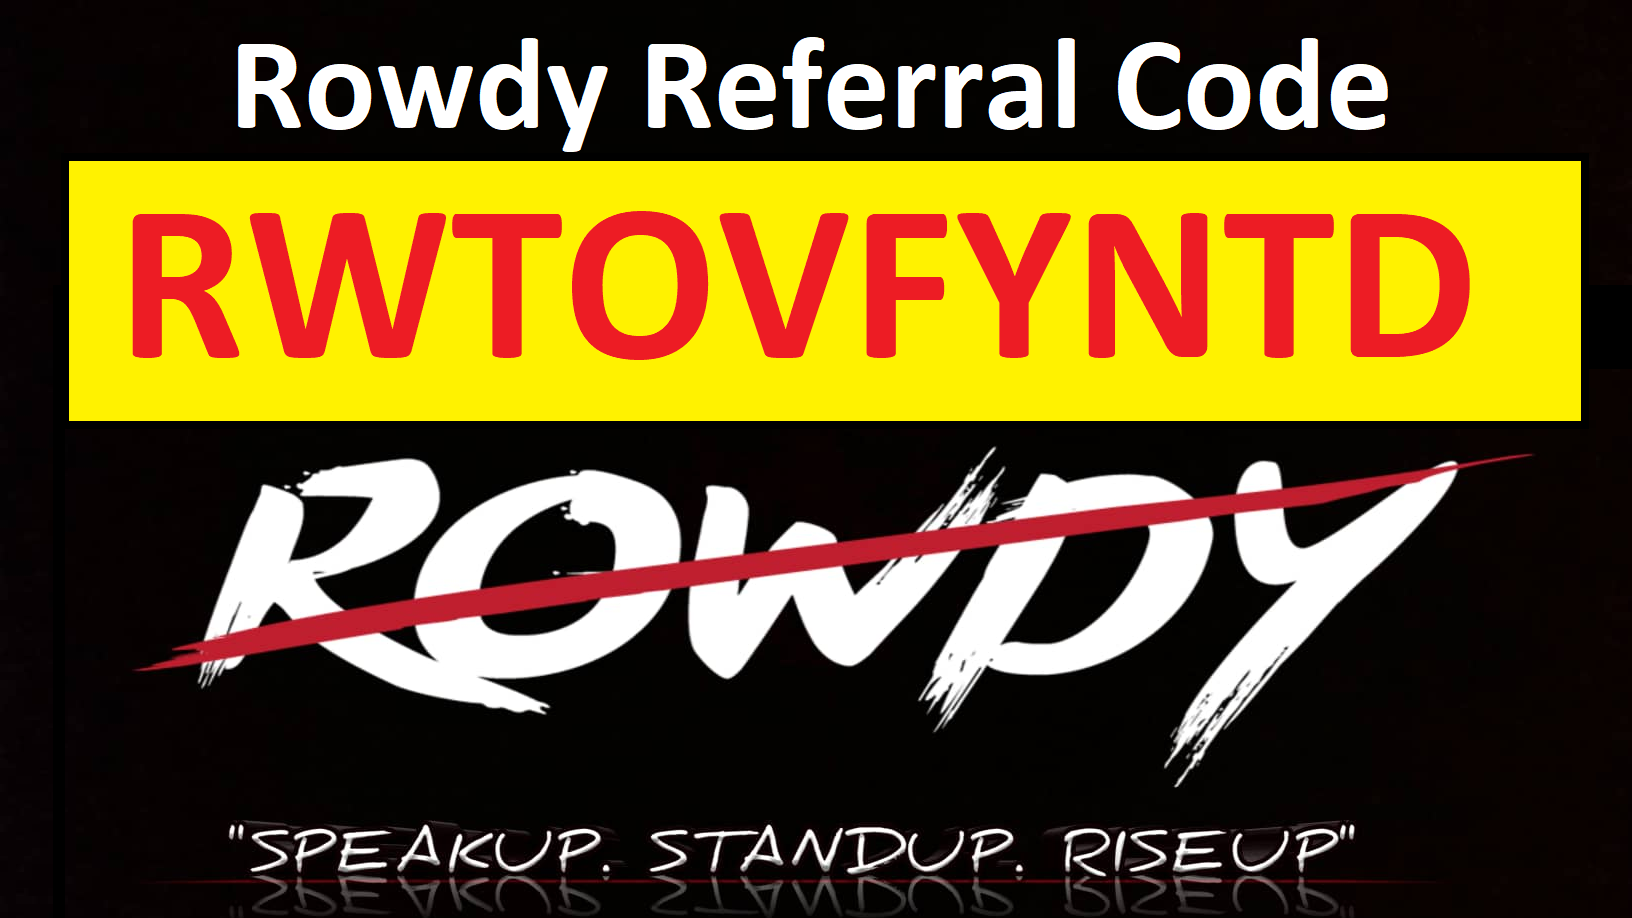 Rowdy Referral Code RWTOVFYNTD Get Free Cash Bonus